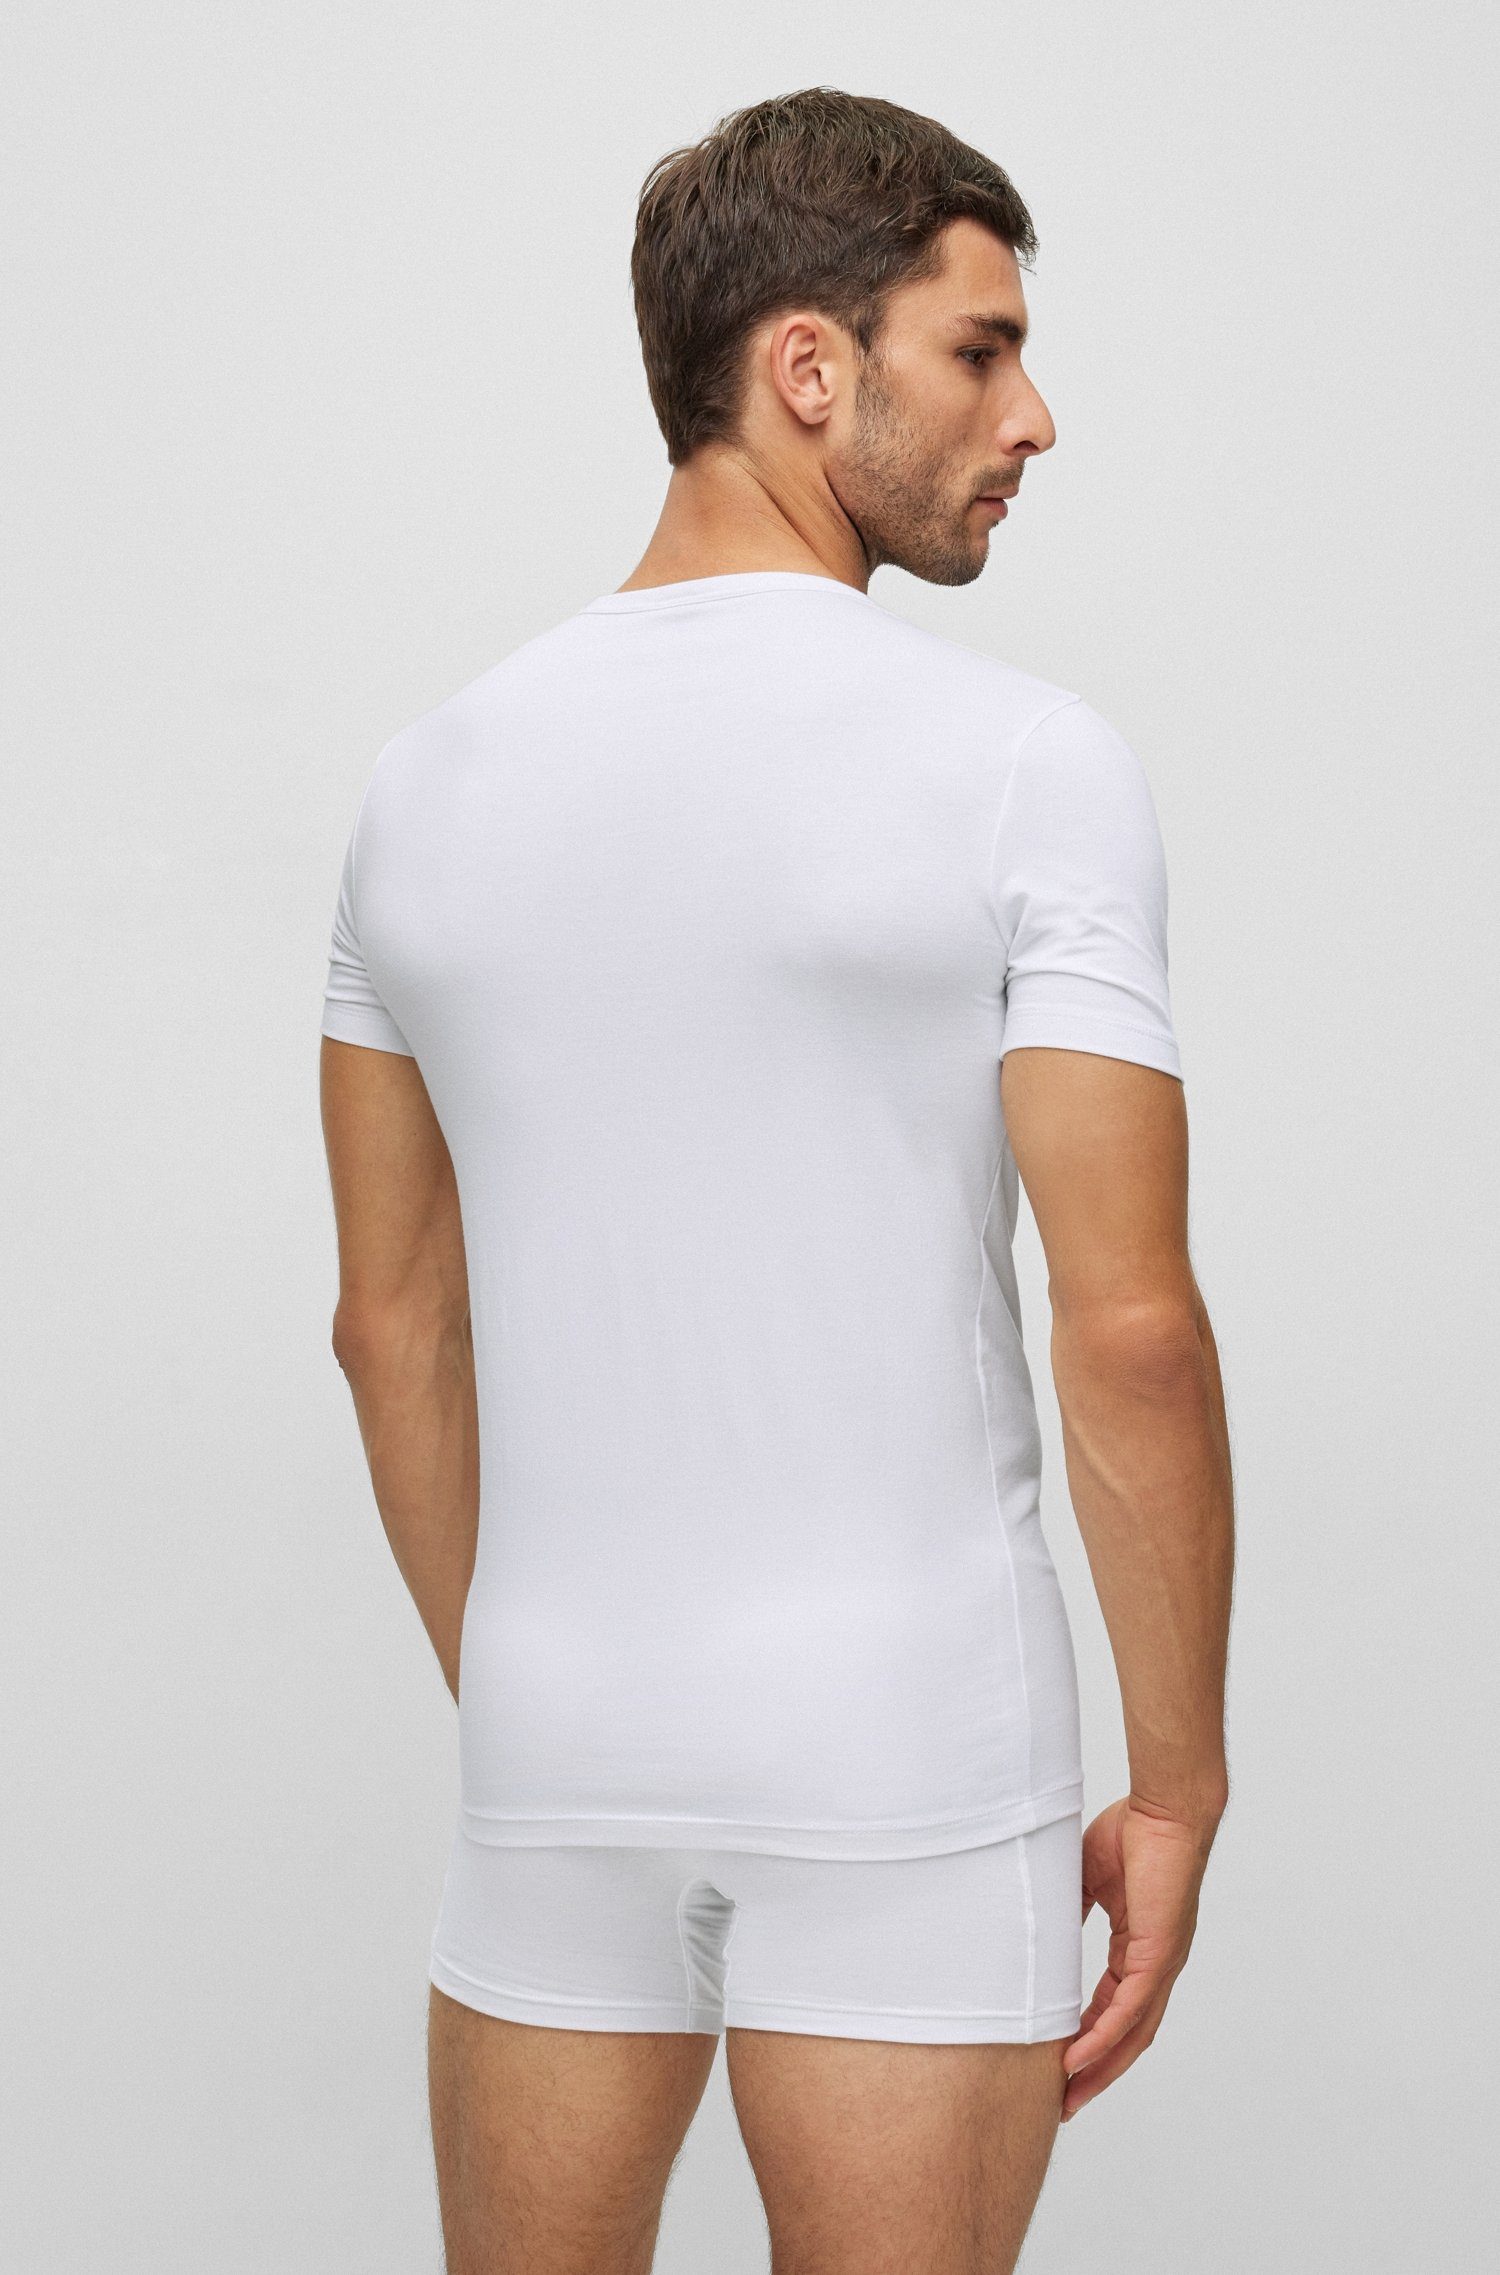 (2-tlg) MODERN TSHIRTVN T-Shirt BOSS weiß 2P